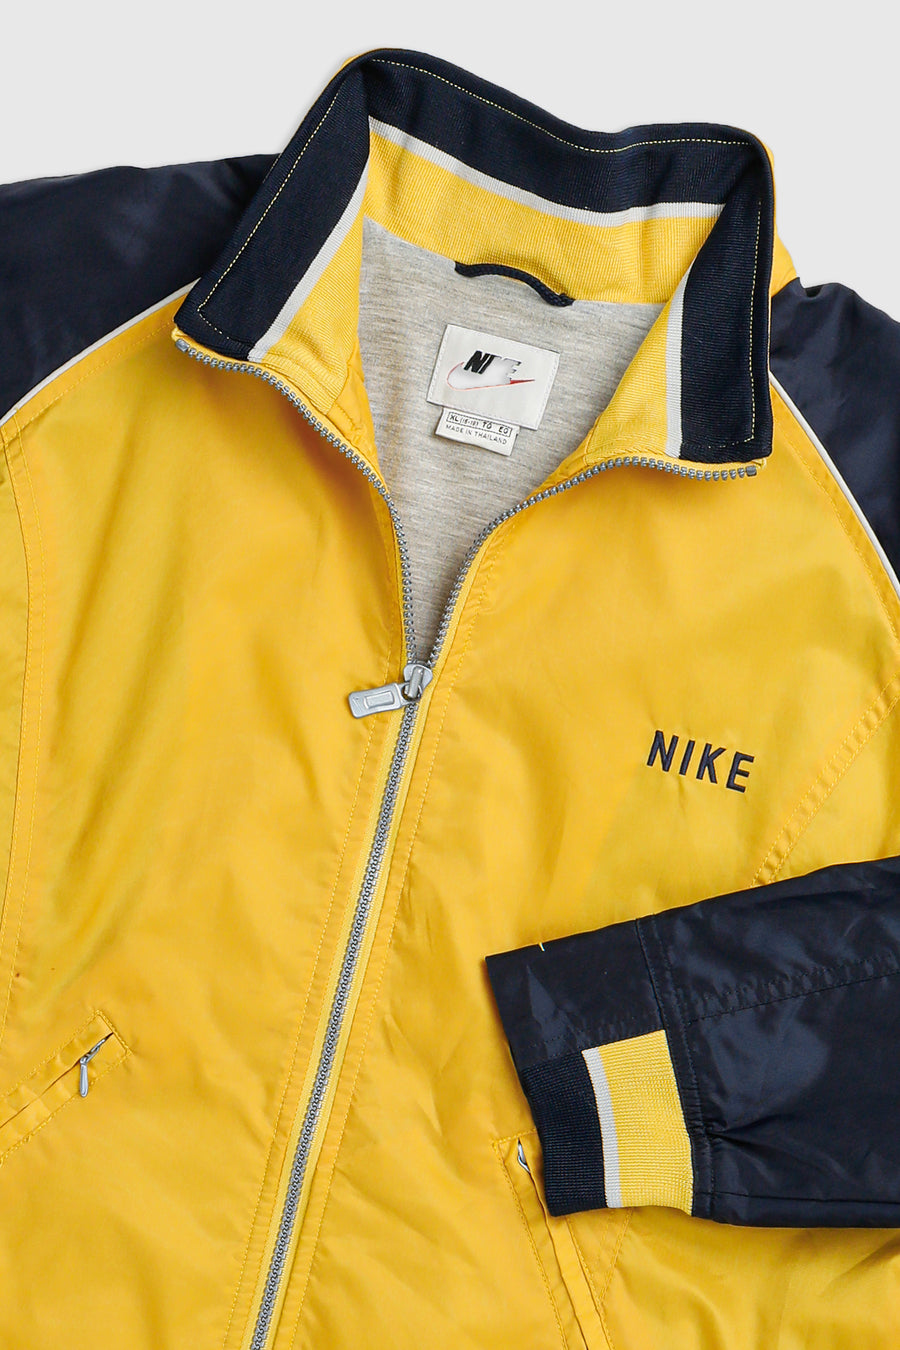 Vintage Nike Windbreaker Jacket - M